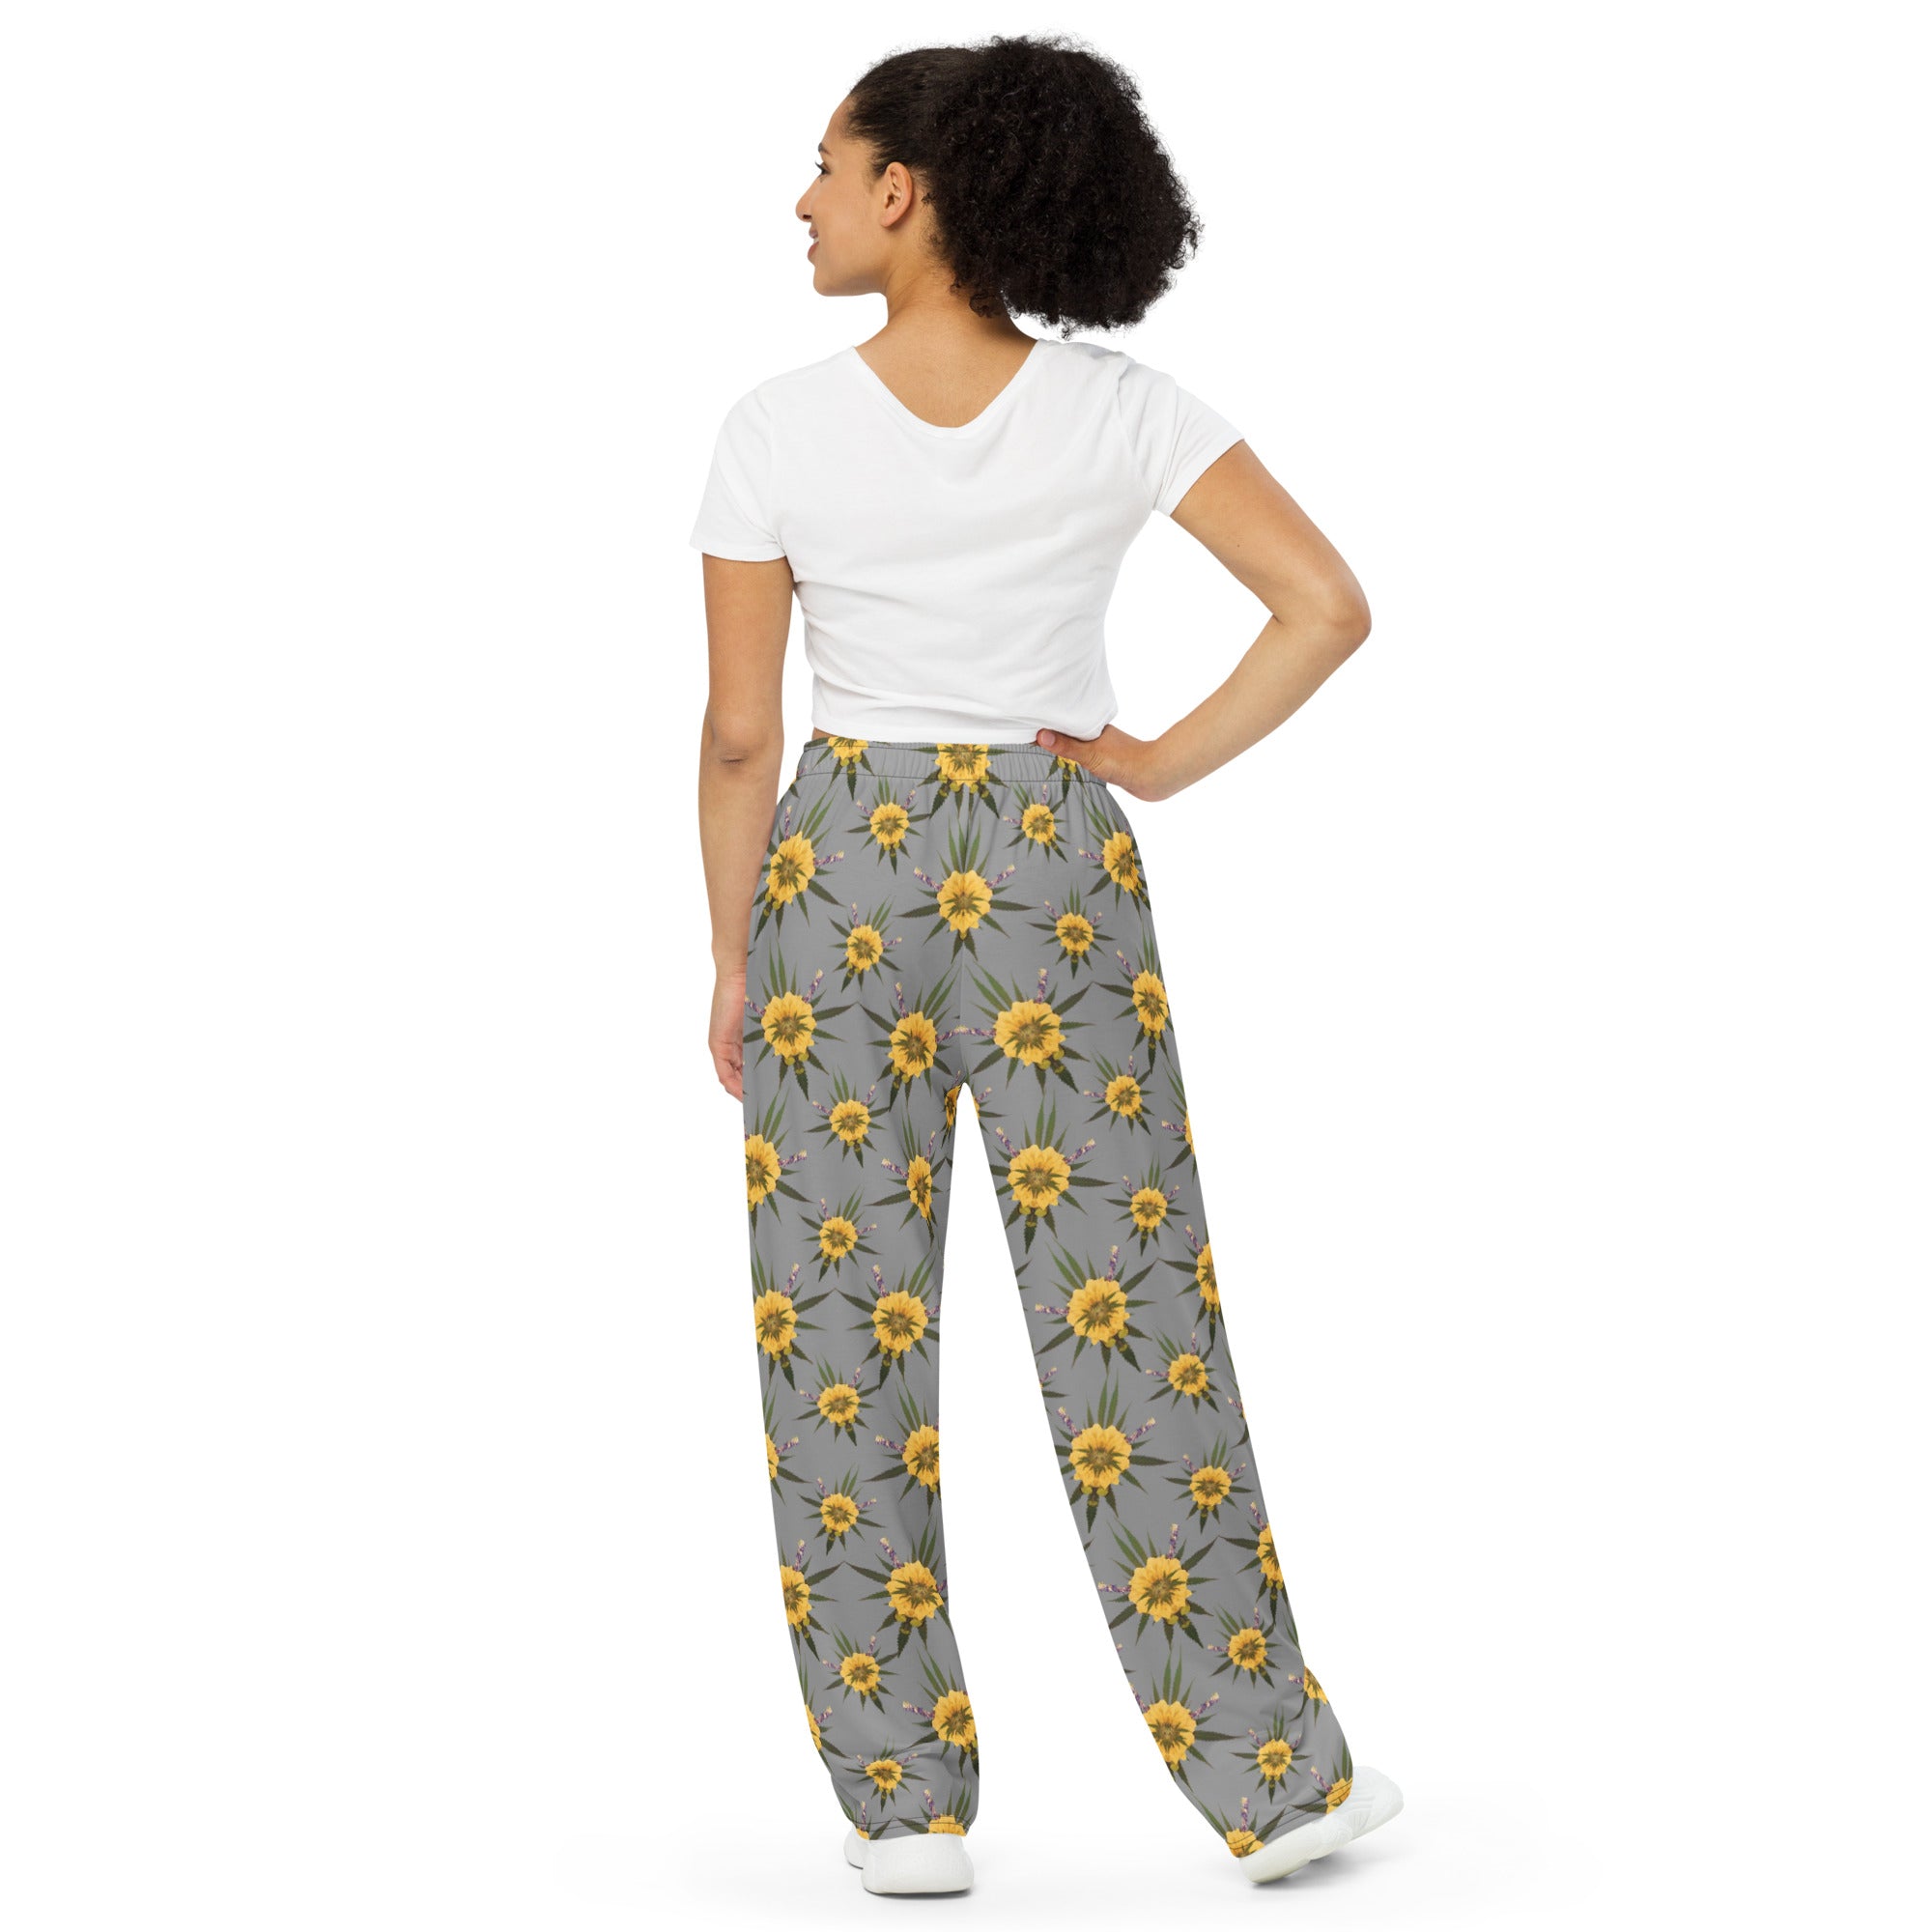 Blossom Playful (Greytful) All-over print unisex wide-leg pants